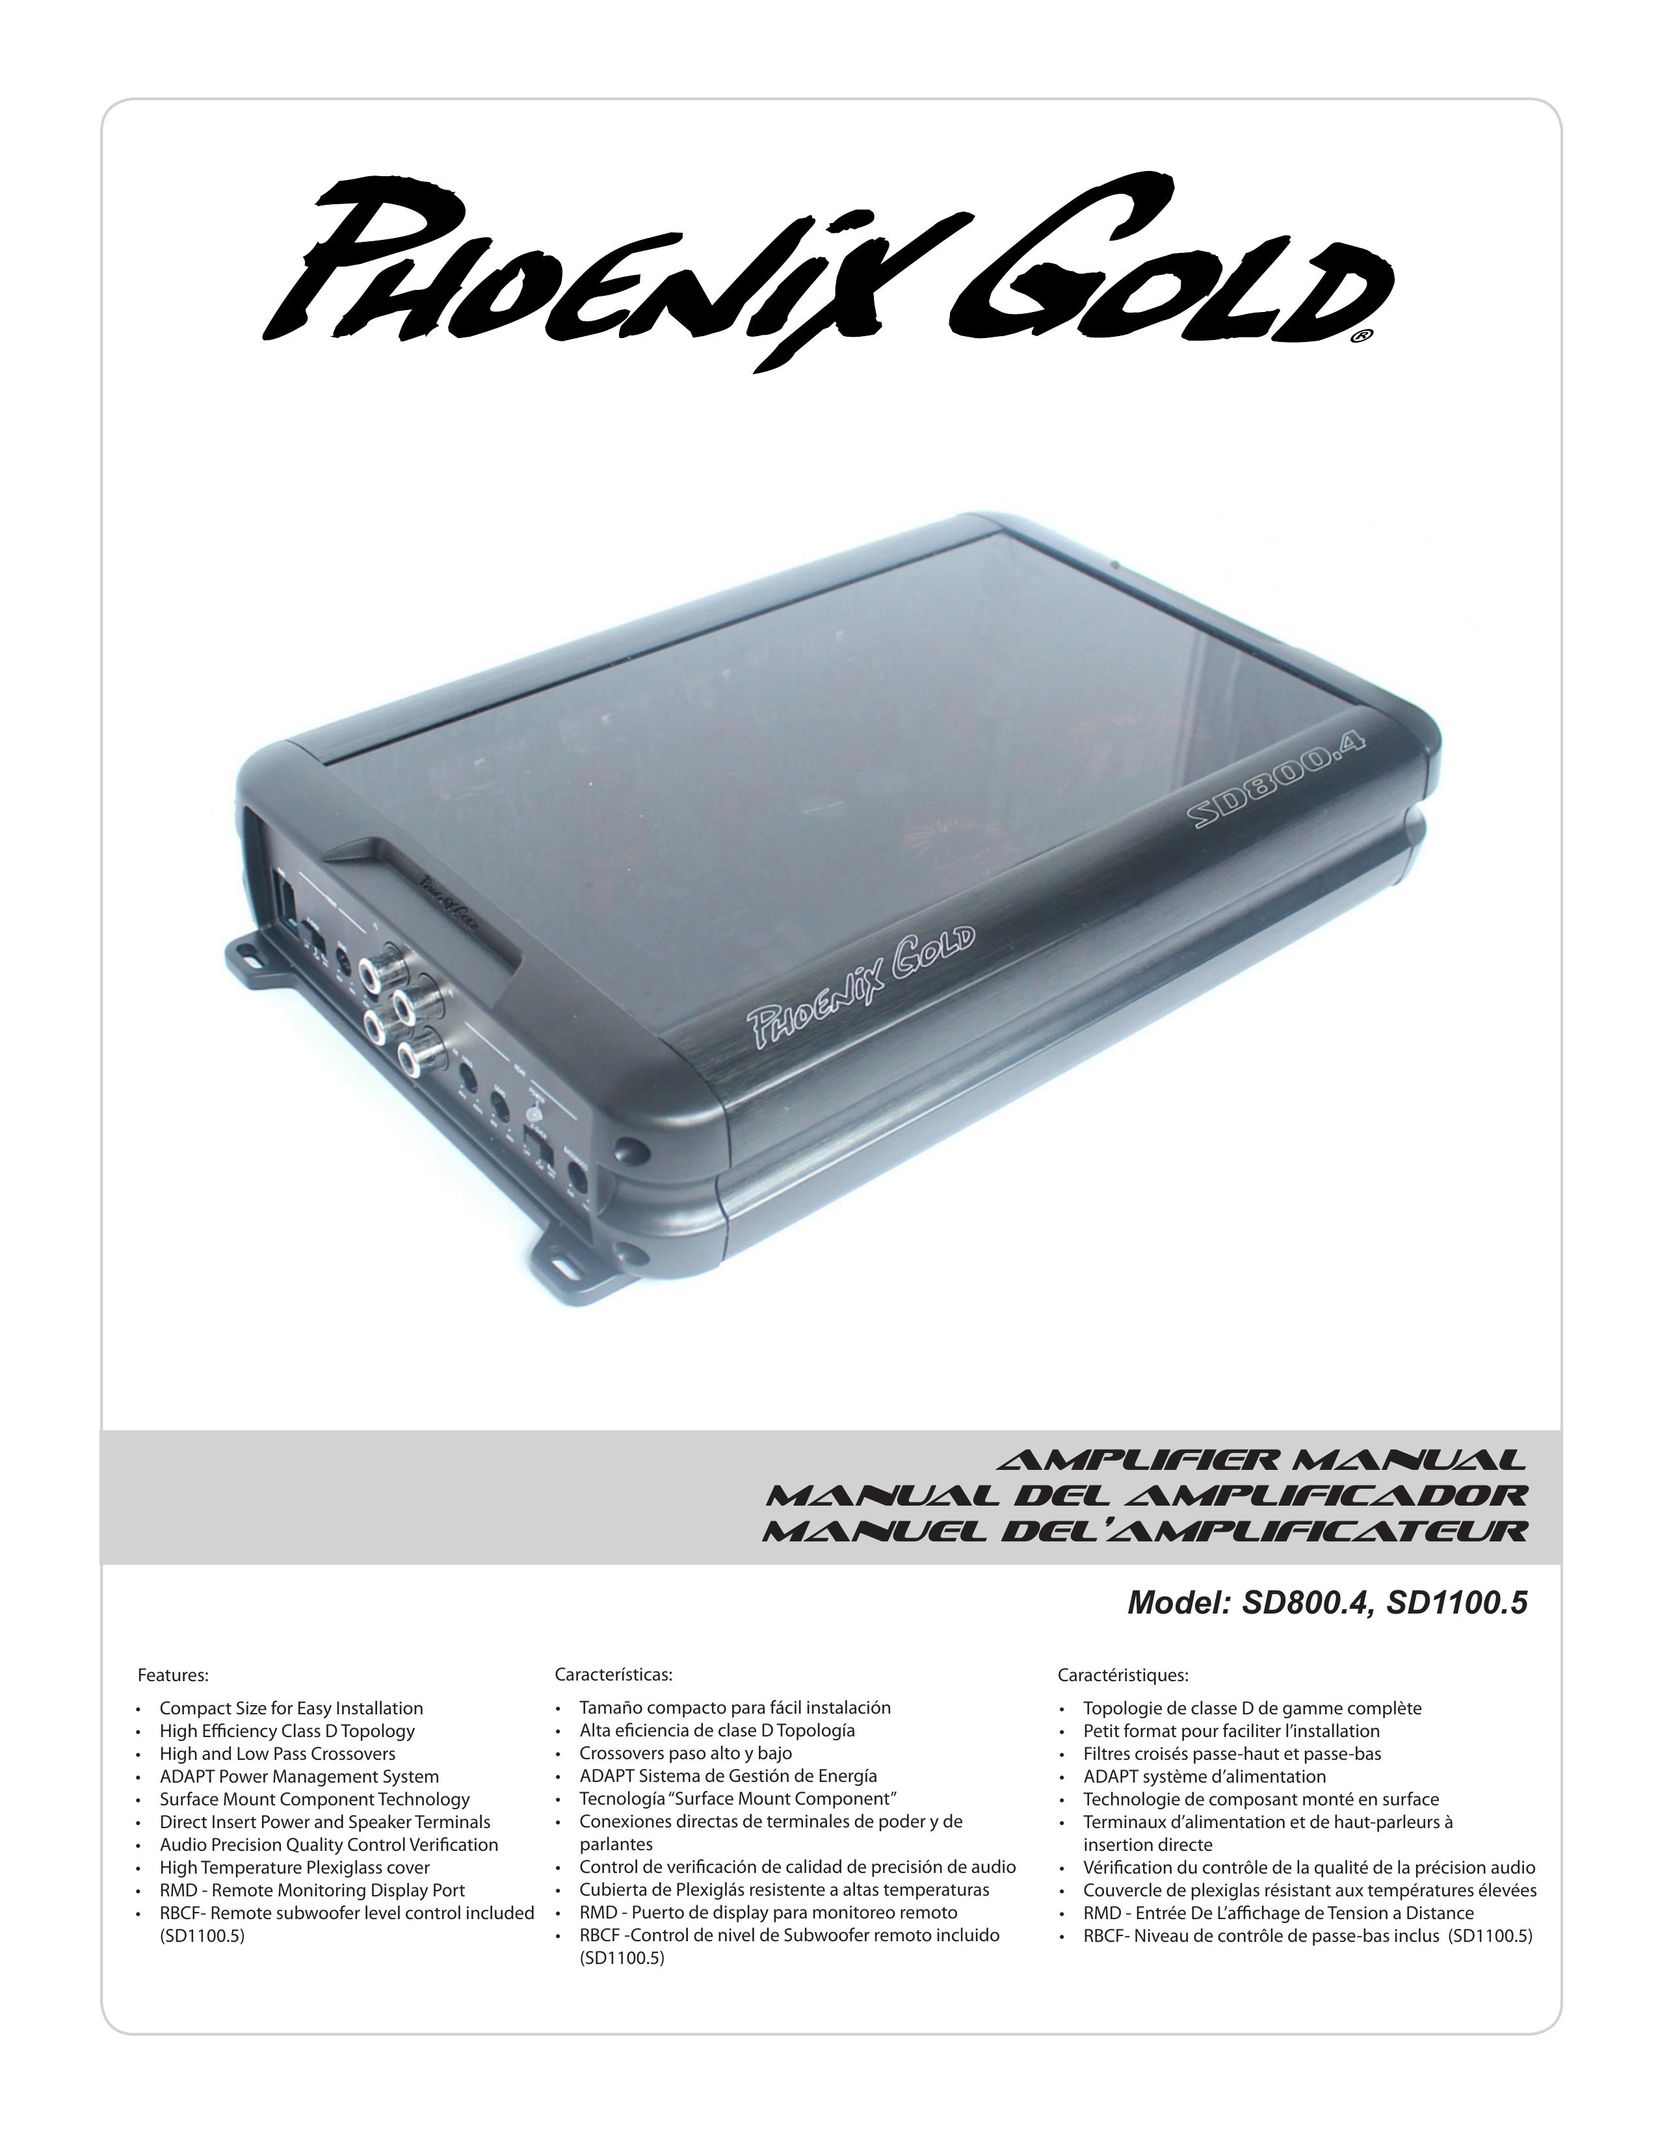 Phoenix Gold SD800.4 Car Amplifier User Manual